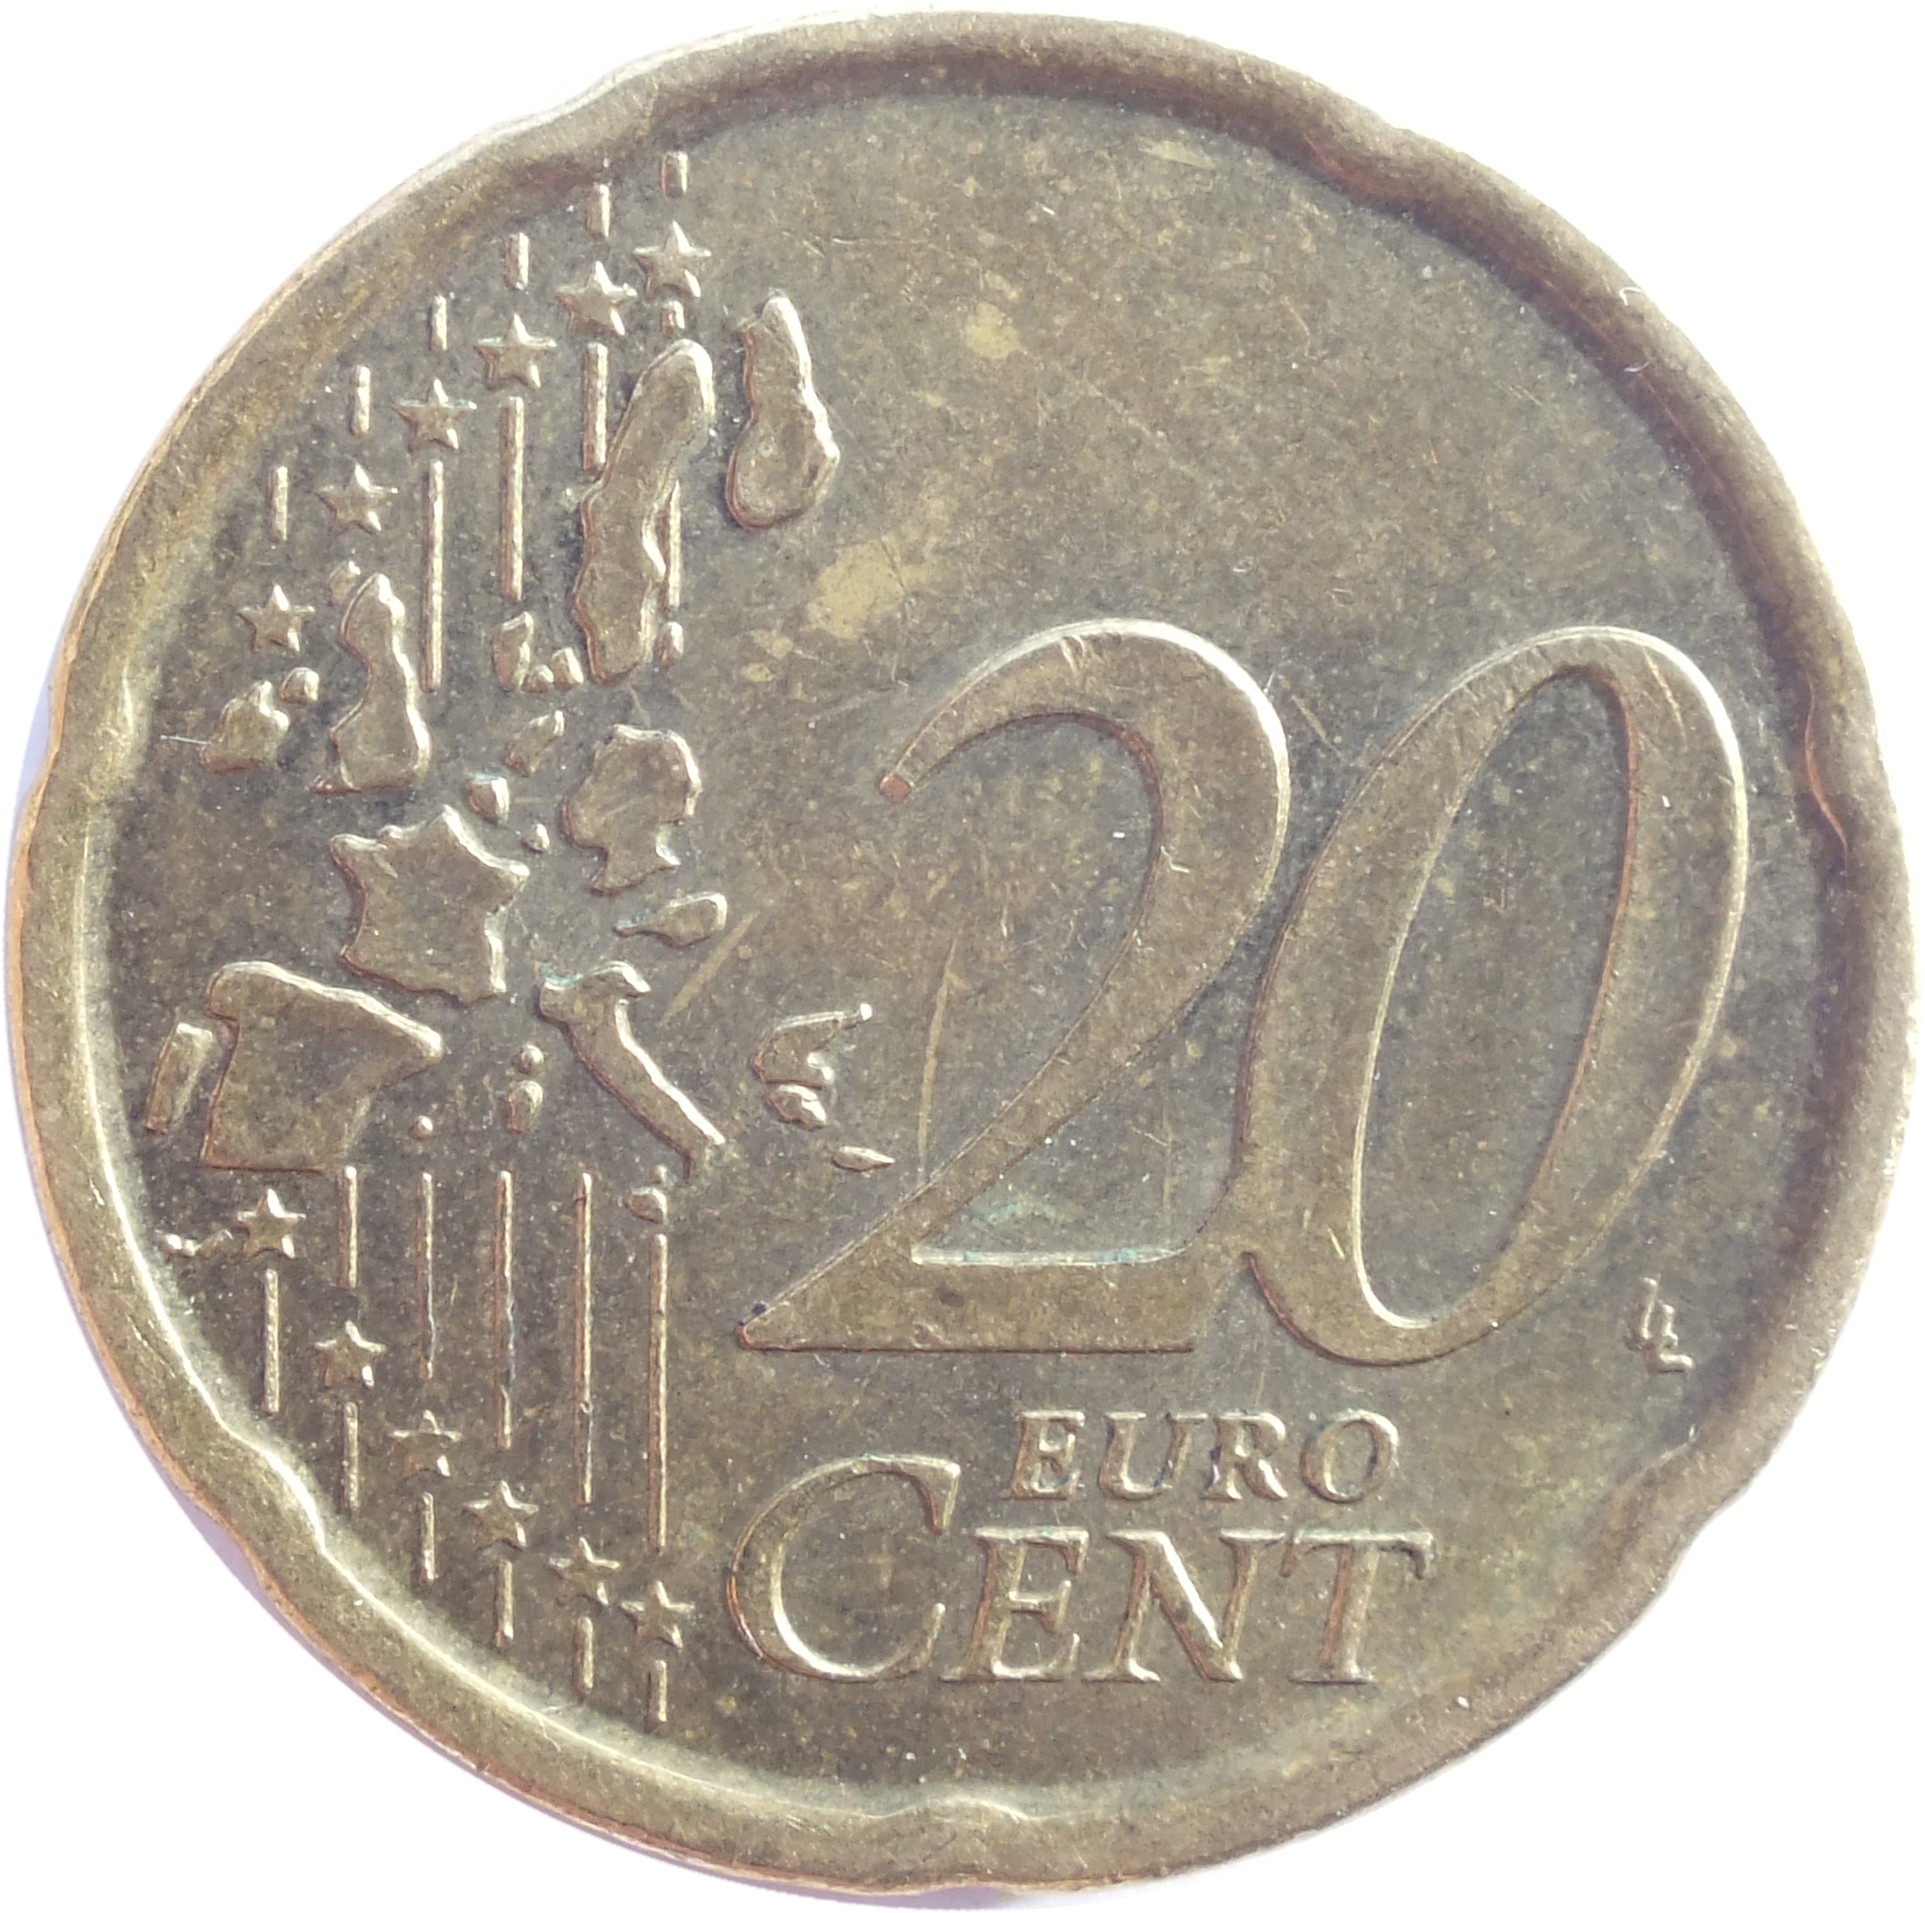 20 53 в рублях. Монета 20 Euro Cent. Монетка 20 Euro Cent. 20 Евроцентов Кипр. 20 Центов монета 2008 Кипр.